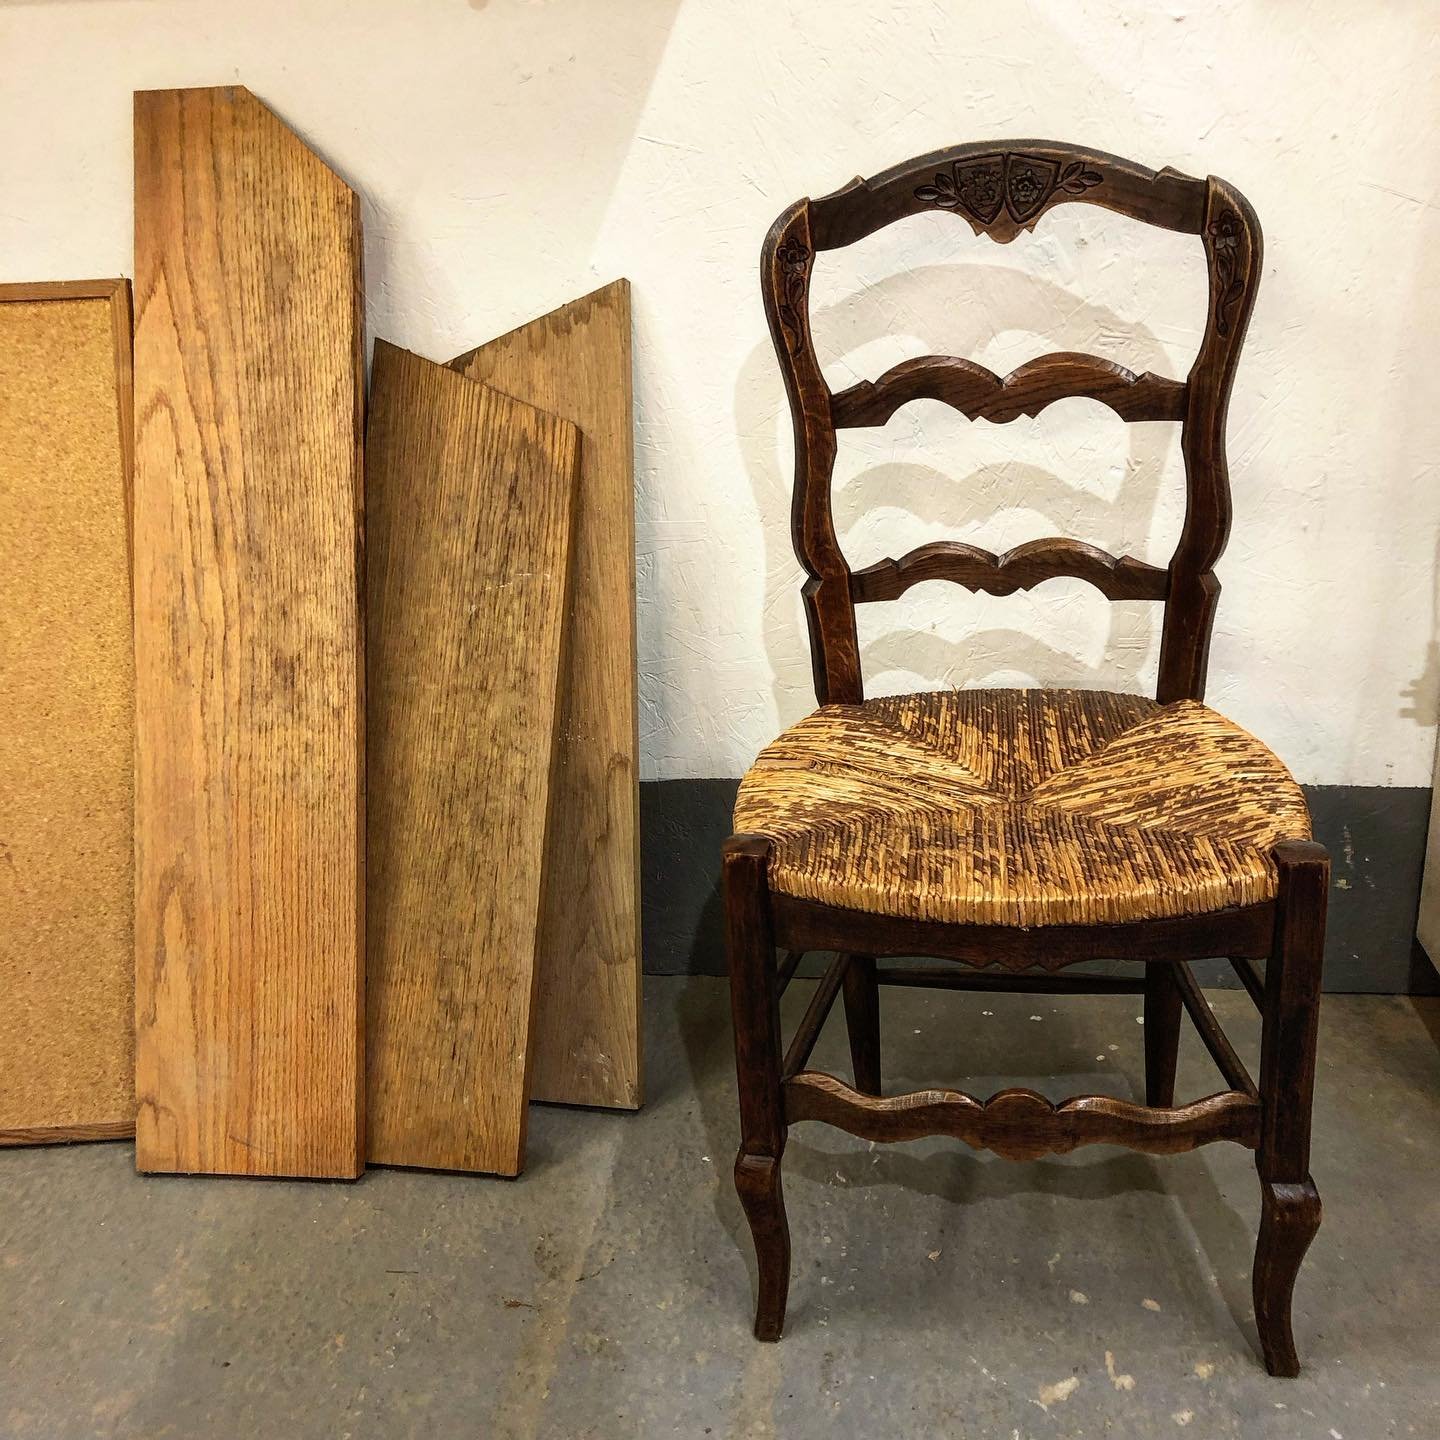 1 of 6 in for some new seats 👌🏻
.
.
.
.
.

#furniture #chairs #chair #restoration #repair #restore #mend #upholsterer #upholstery #reupholster  #rush #rattan #cane #seatweaving#rushseating #somerset #dorset #southwest #smallbusiness #design #interi